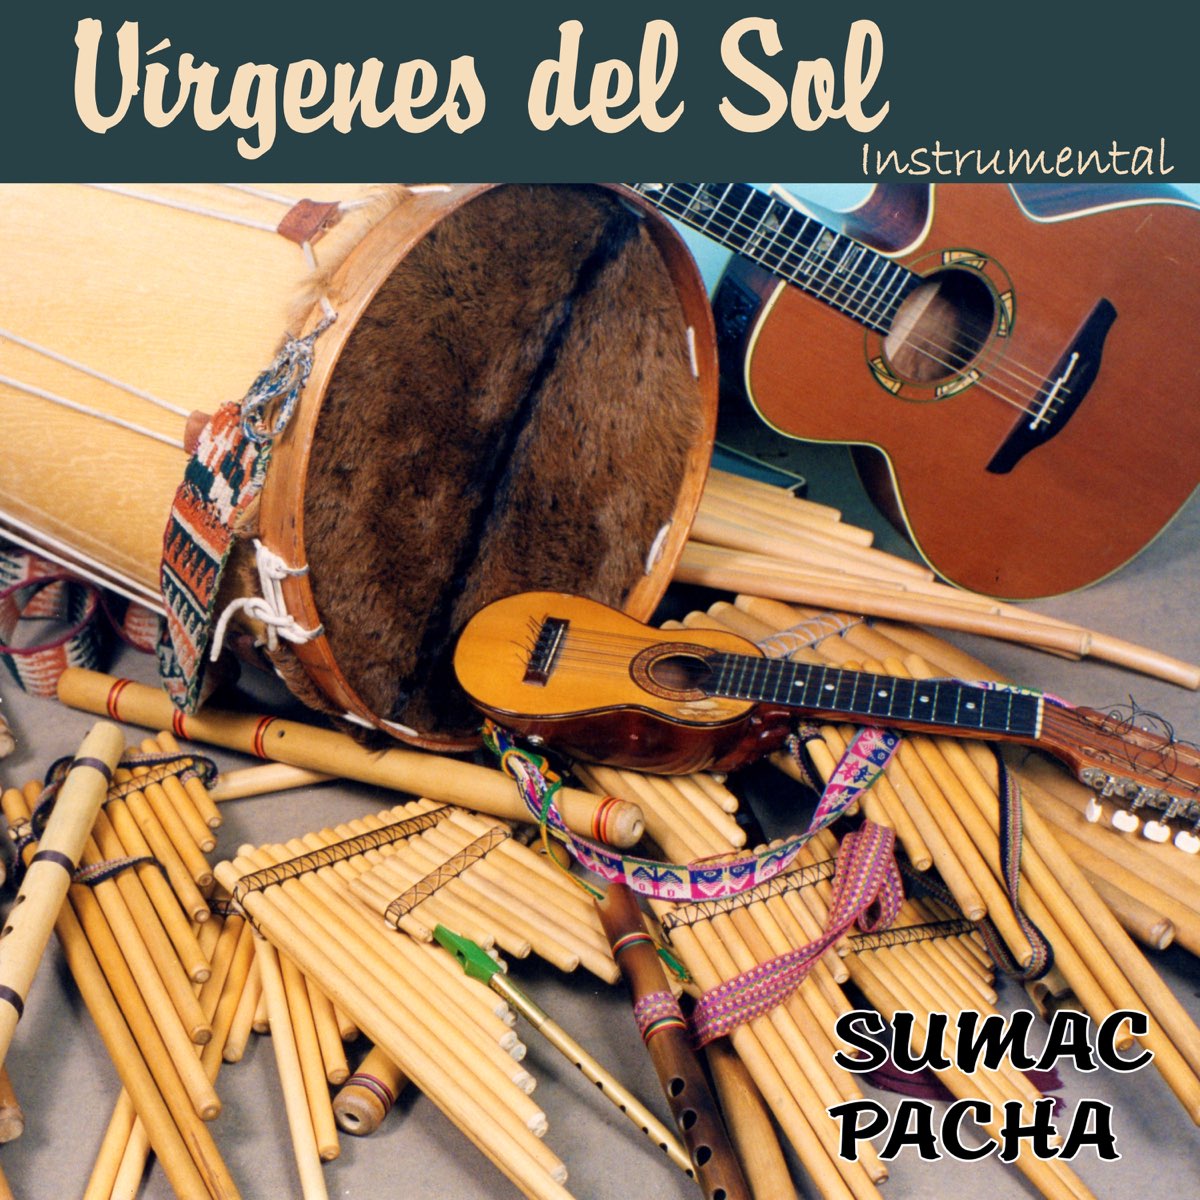 Virgenes del Sol (Instrumental) by Sumac Pacha on Apple Music